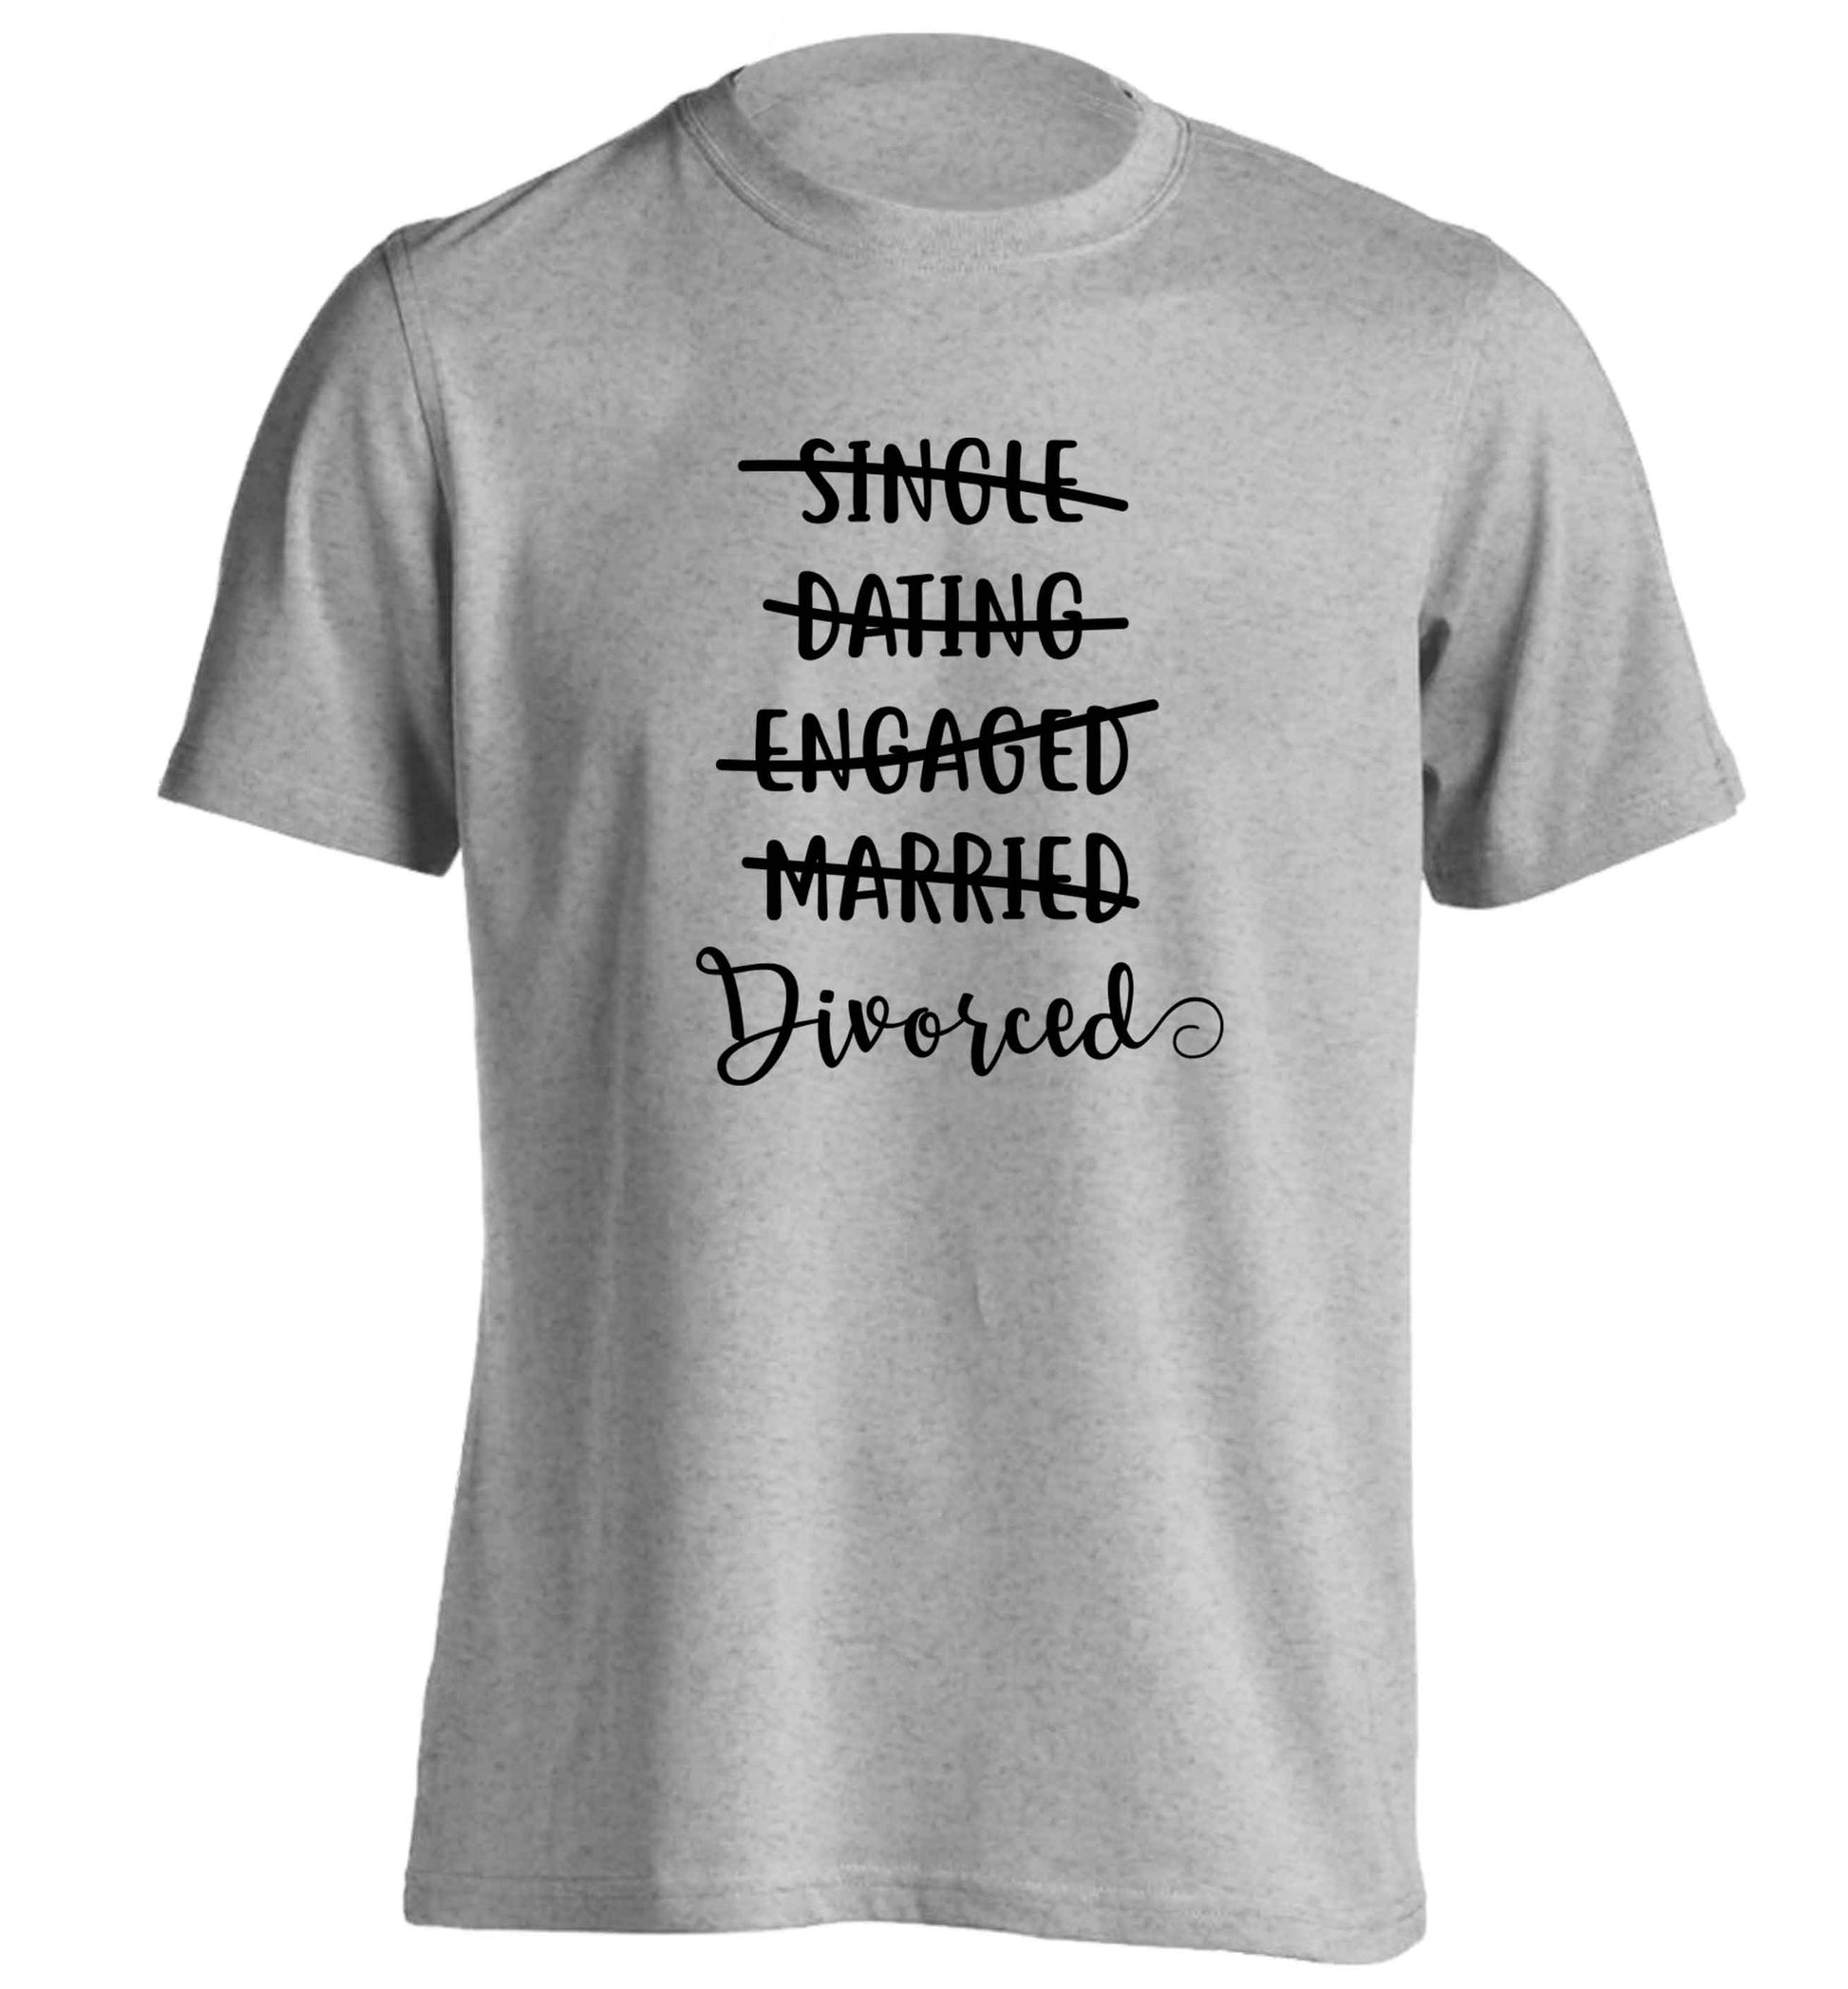 Single, dating, engaged, divorced adults unisex grey Tshirt 2XL